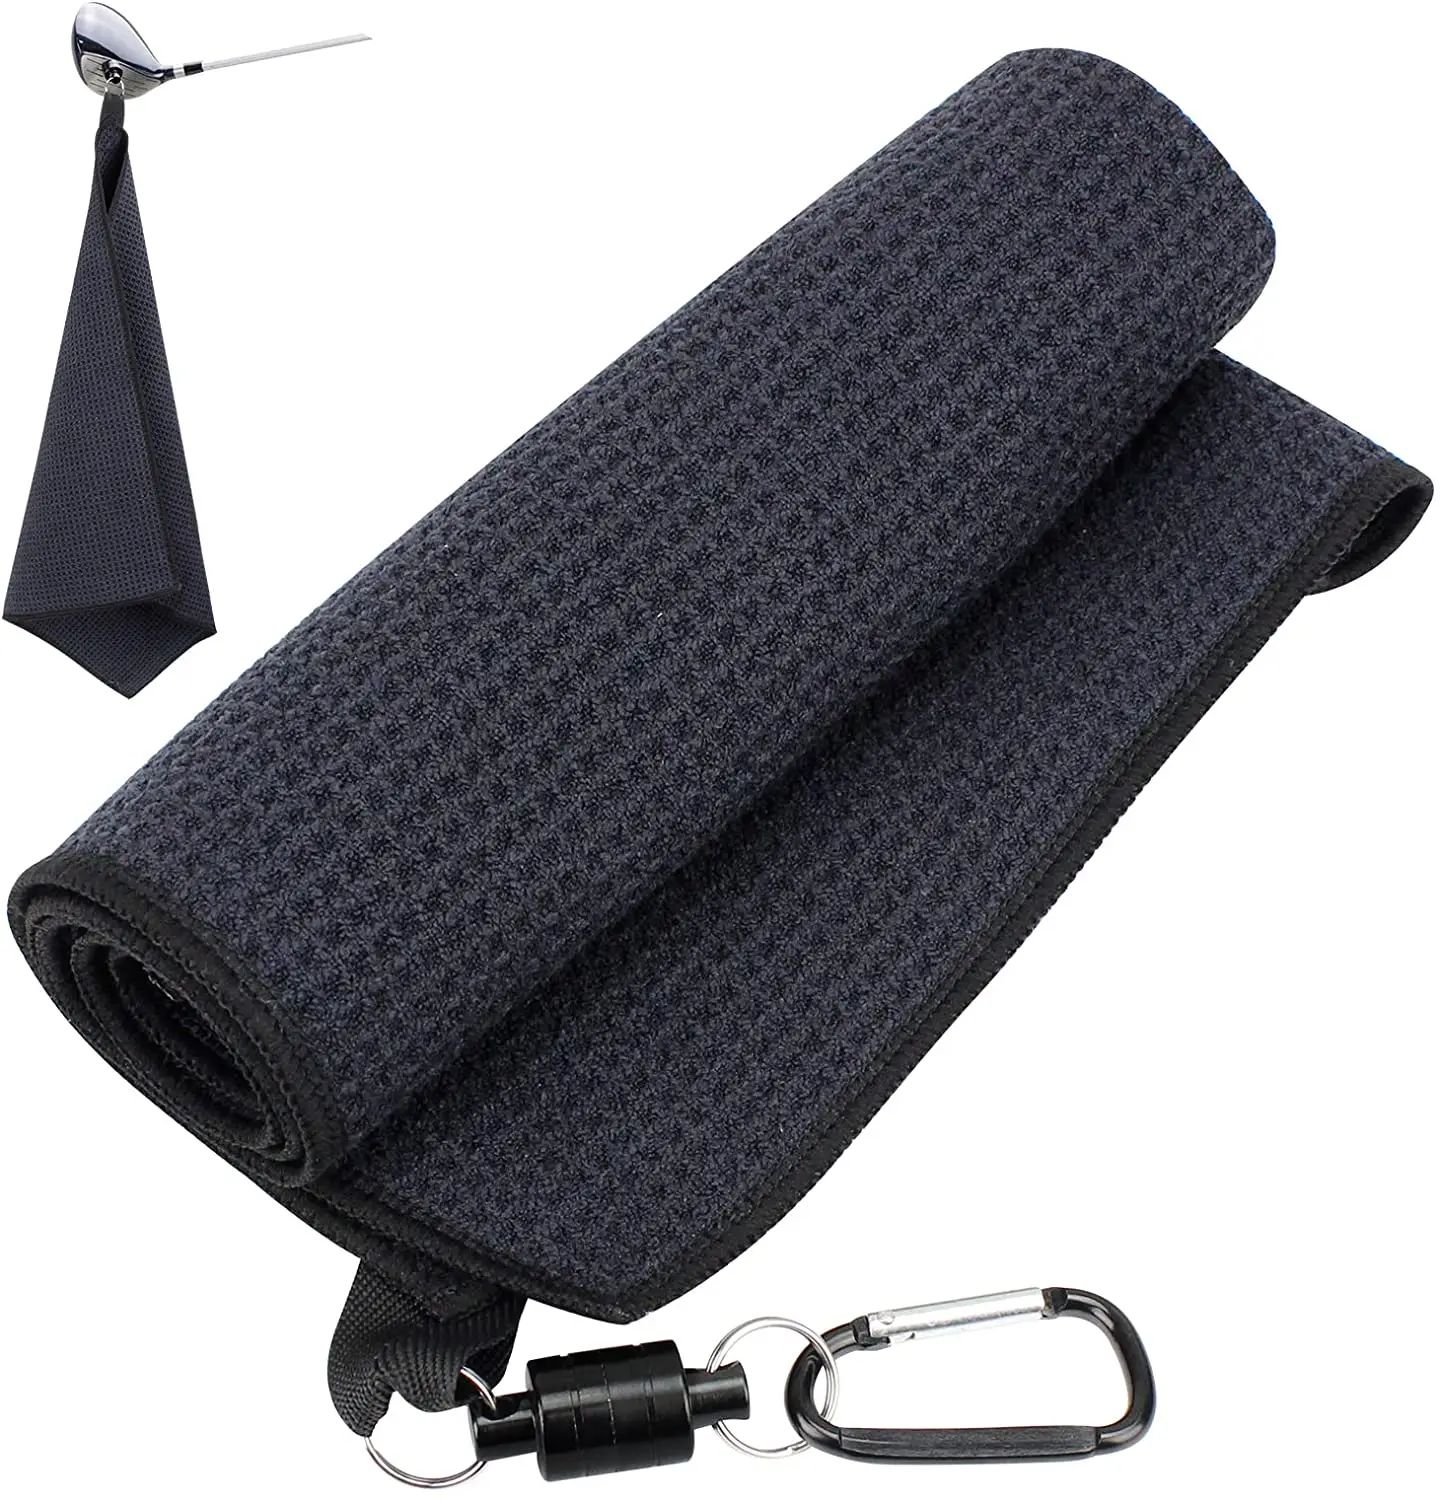 Color:Towel and black clip